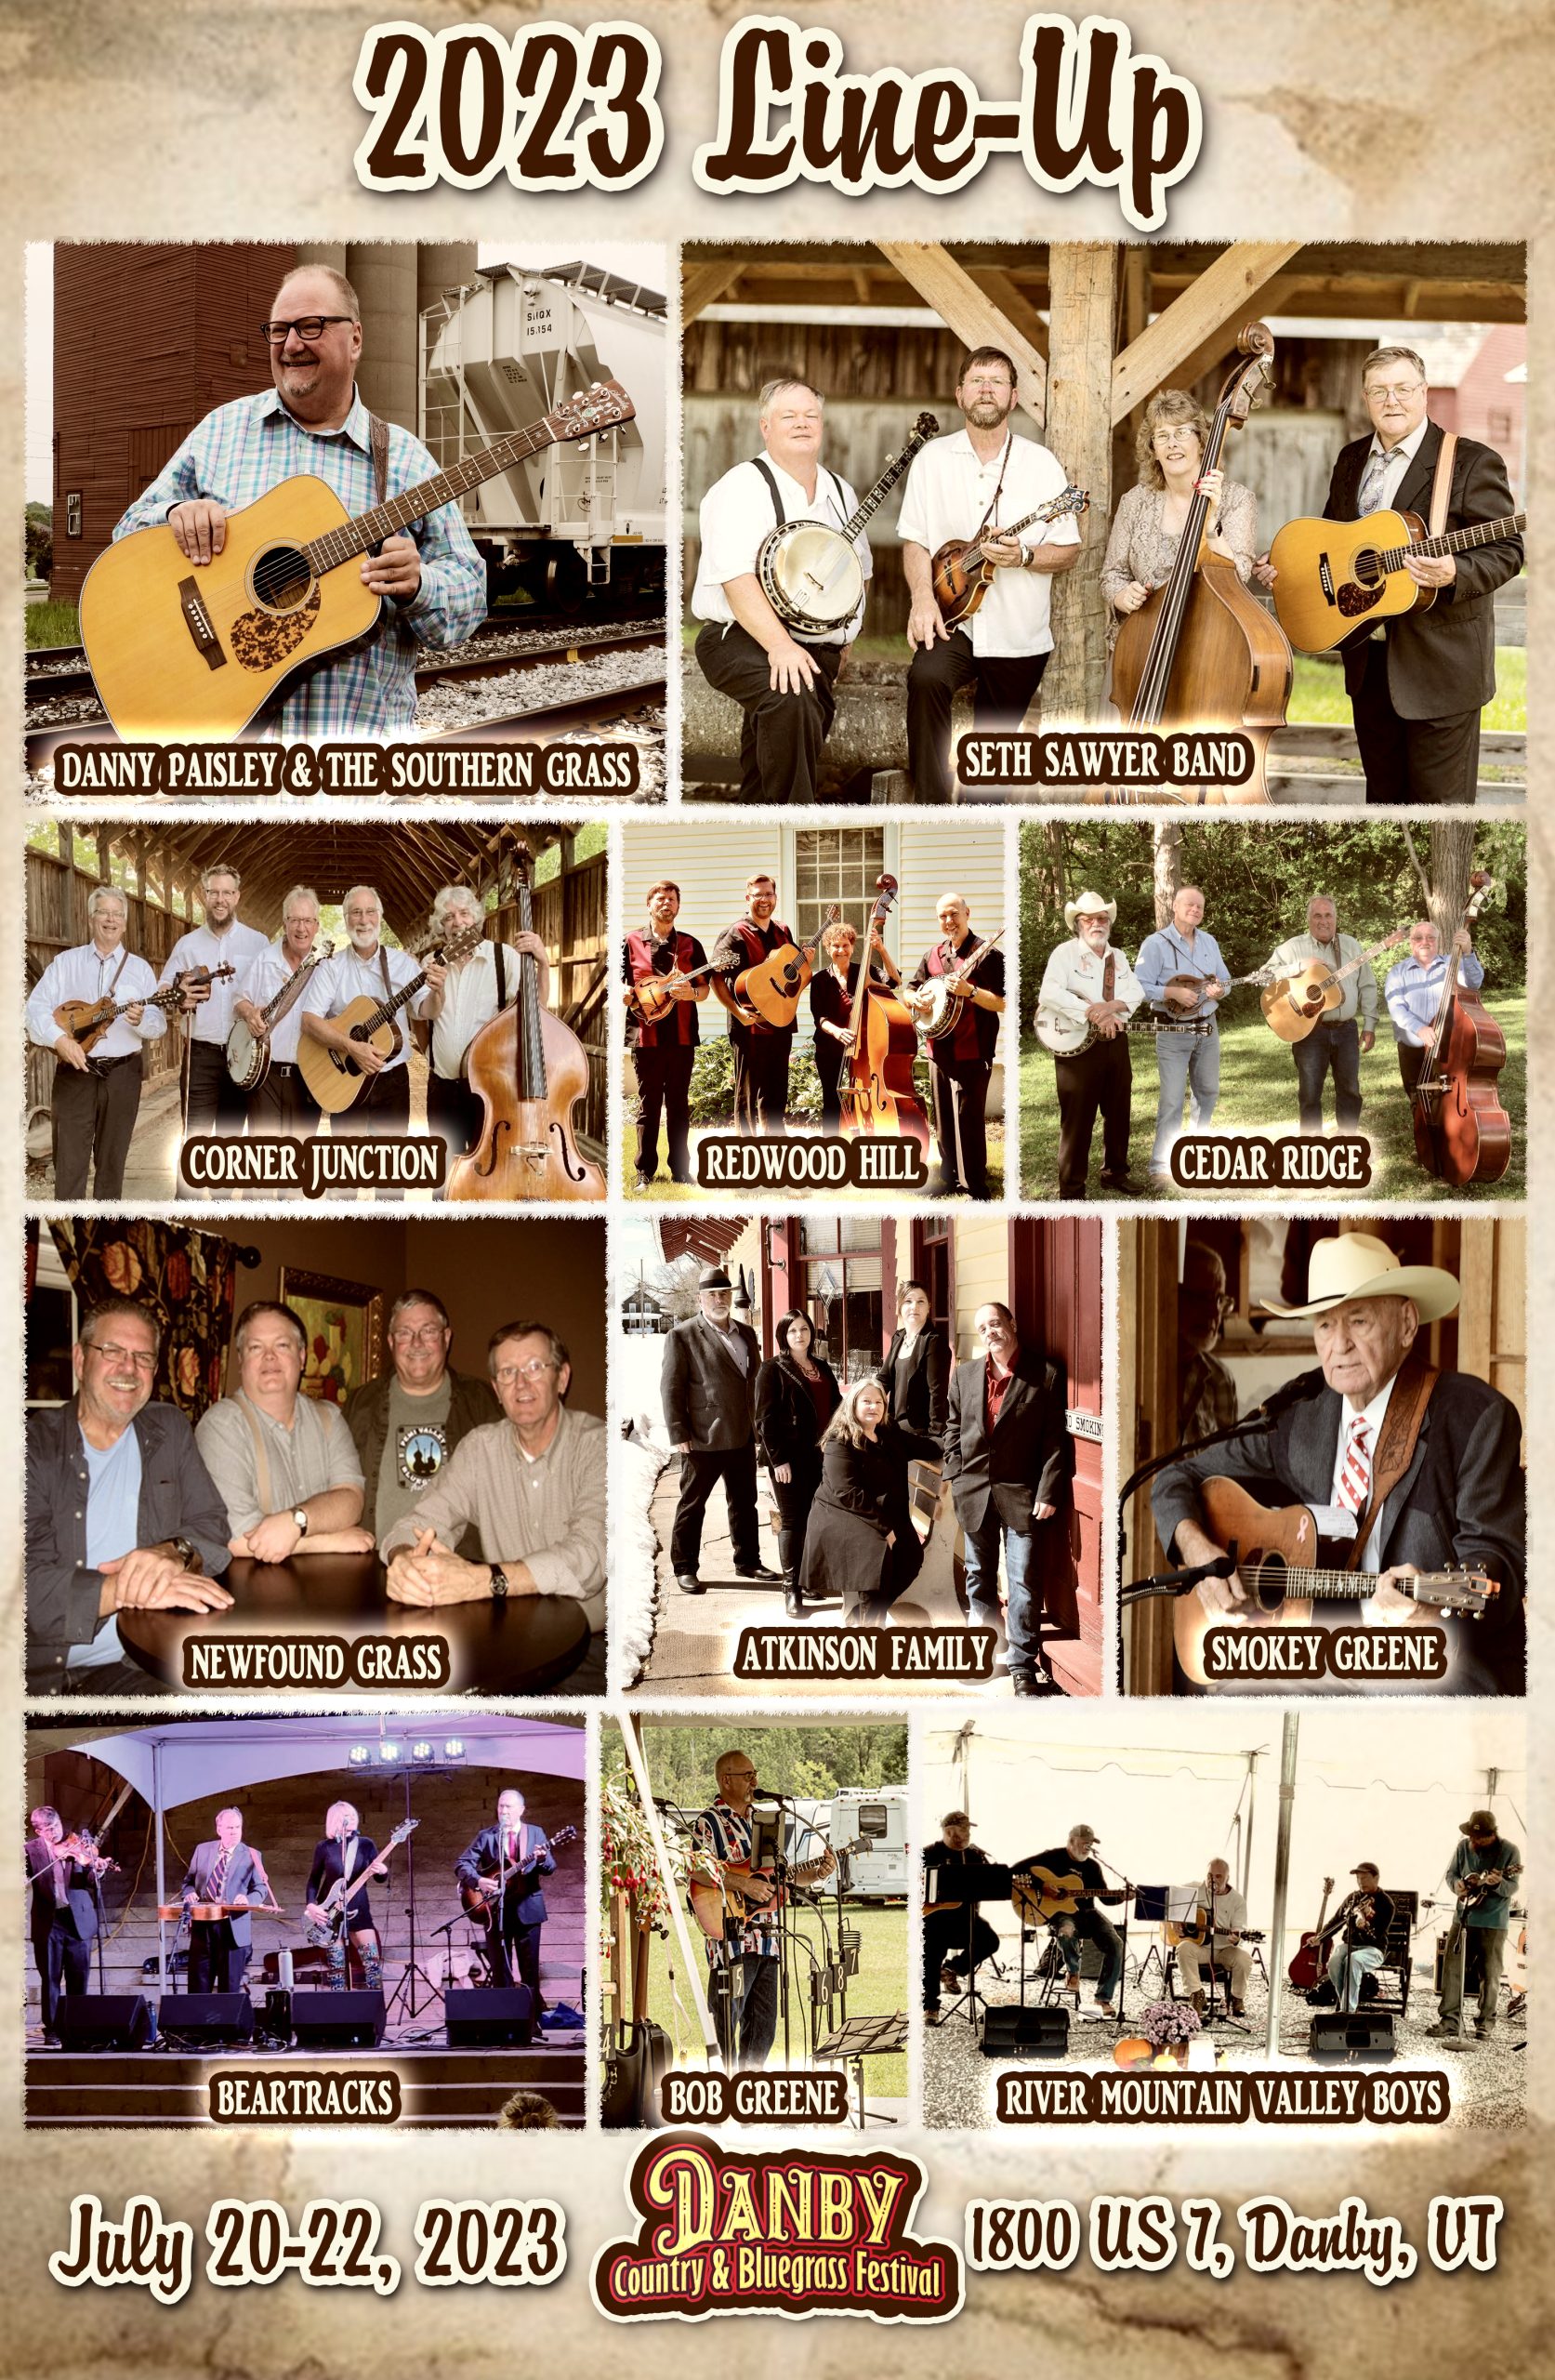 Danby Country & Bluegrass Festival